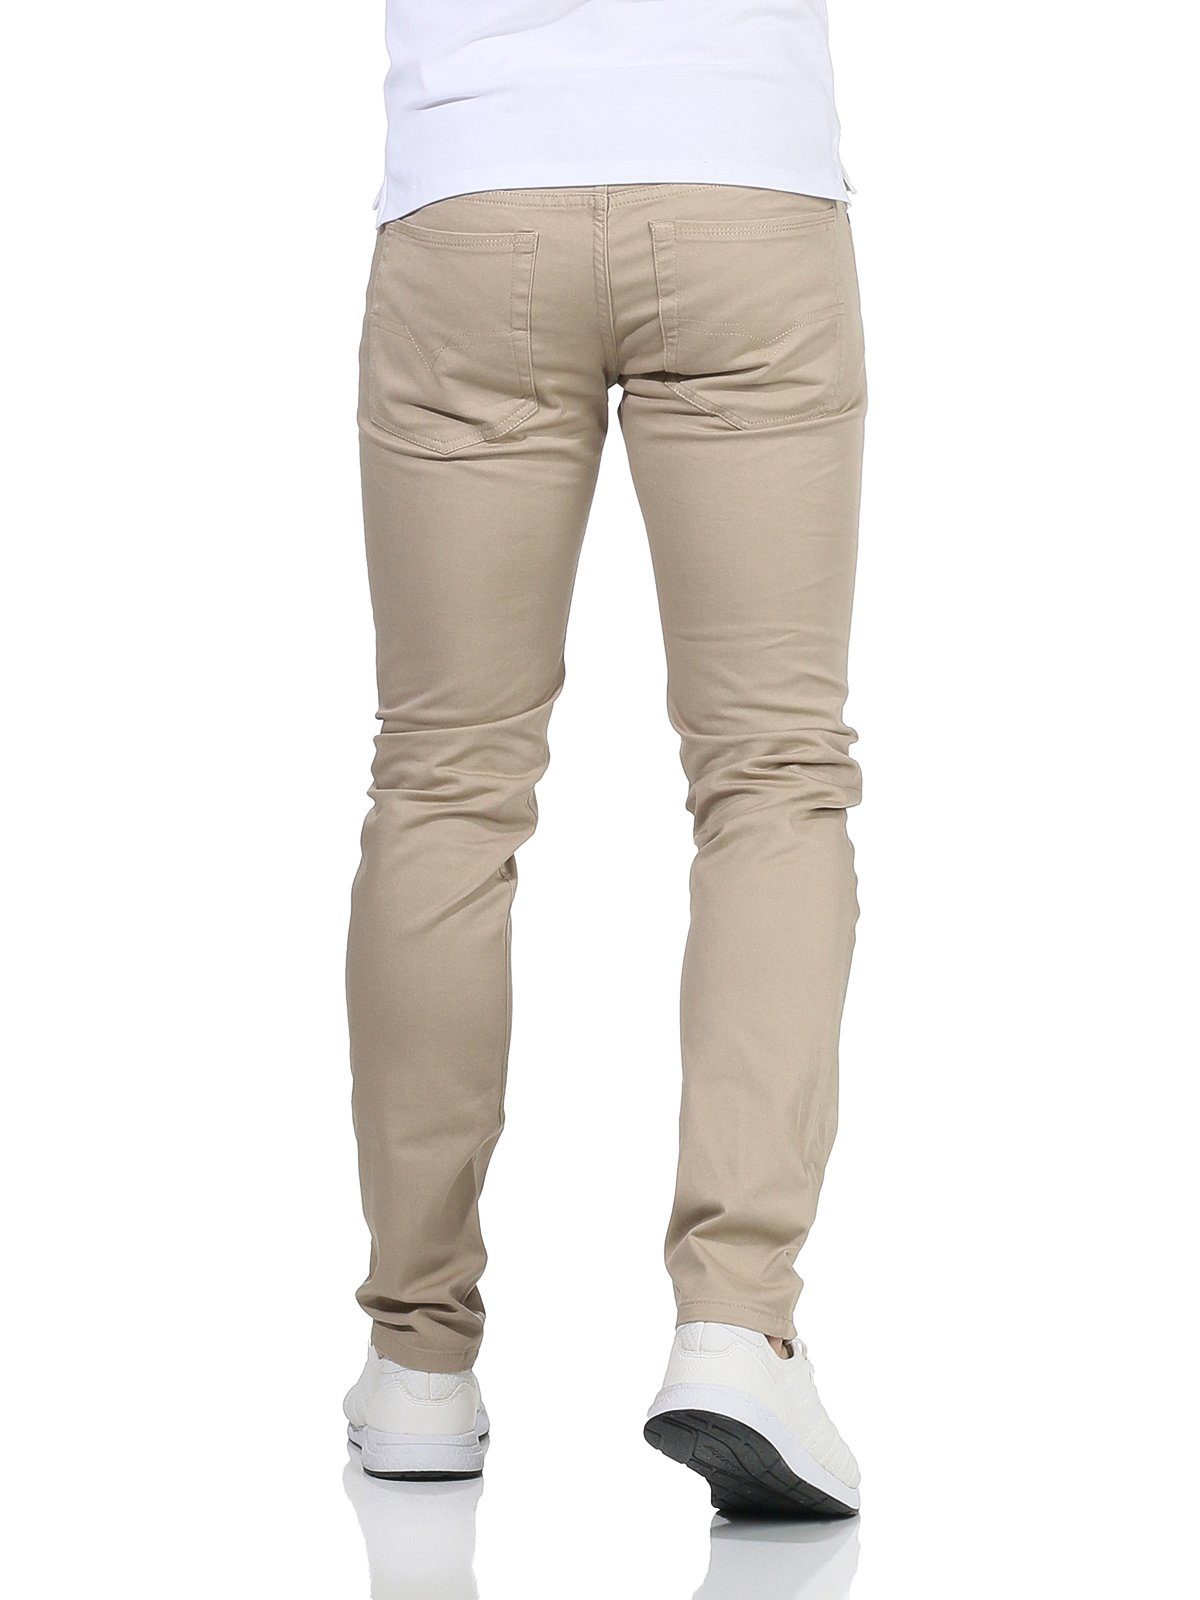 Einheitsgröße Länge: 5-Pocket-Style, Skinny-fit-Jeans Sommer, Beige Herren Skinny-fit-Jeans 32 Hose, Diesel inch Diesel R-TROXER-A